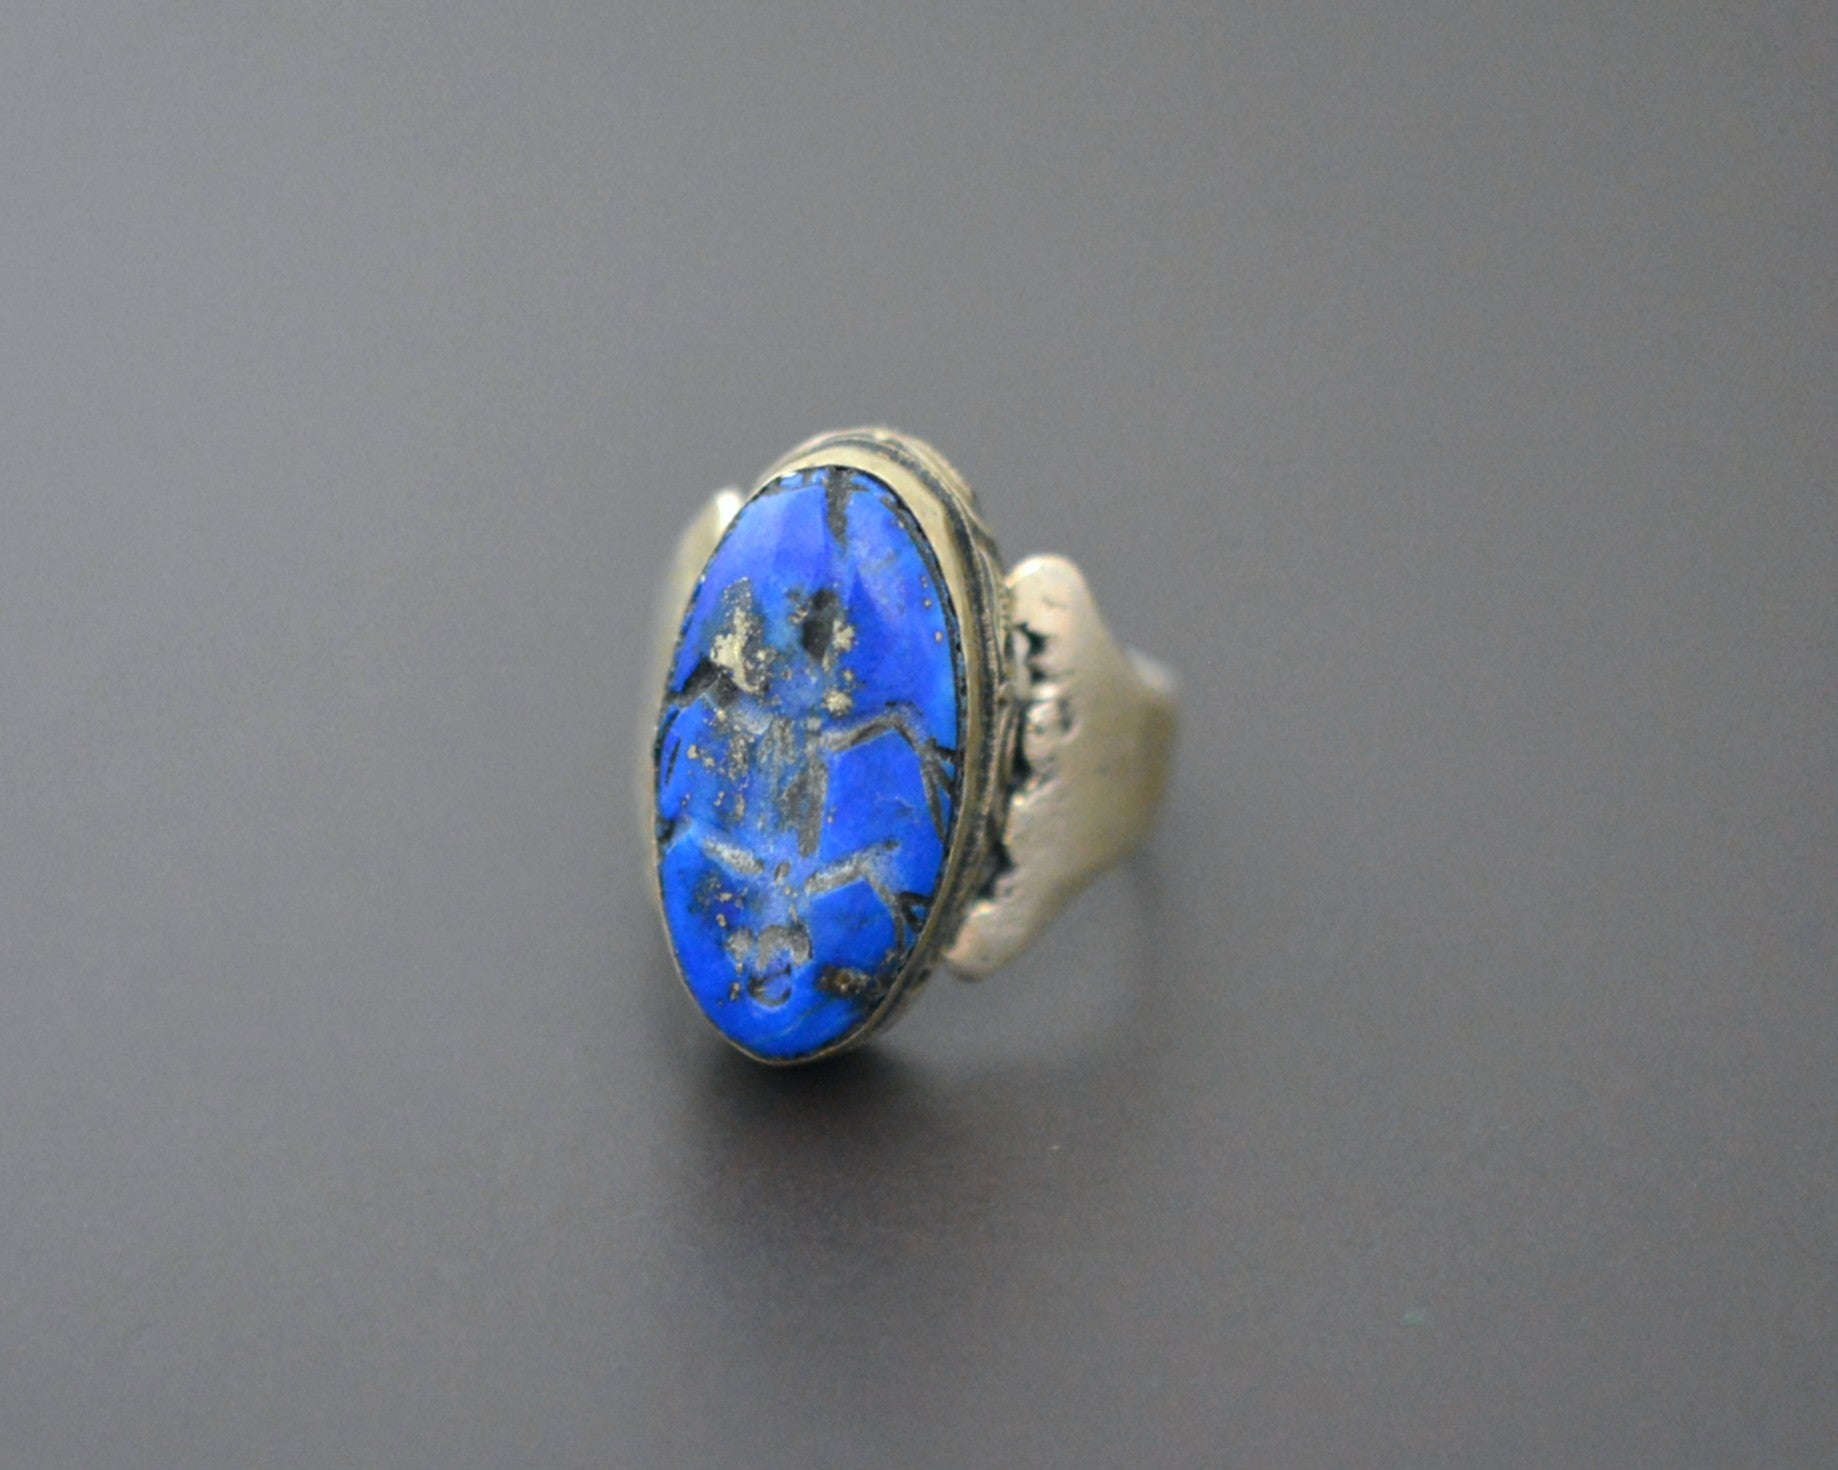 Afghani Lapis Lazuli Intaglio Ring  - Size 7.75